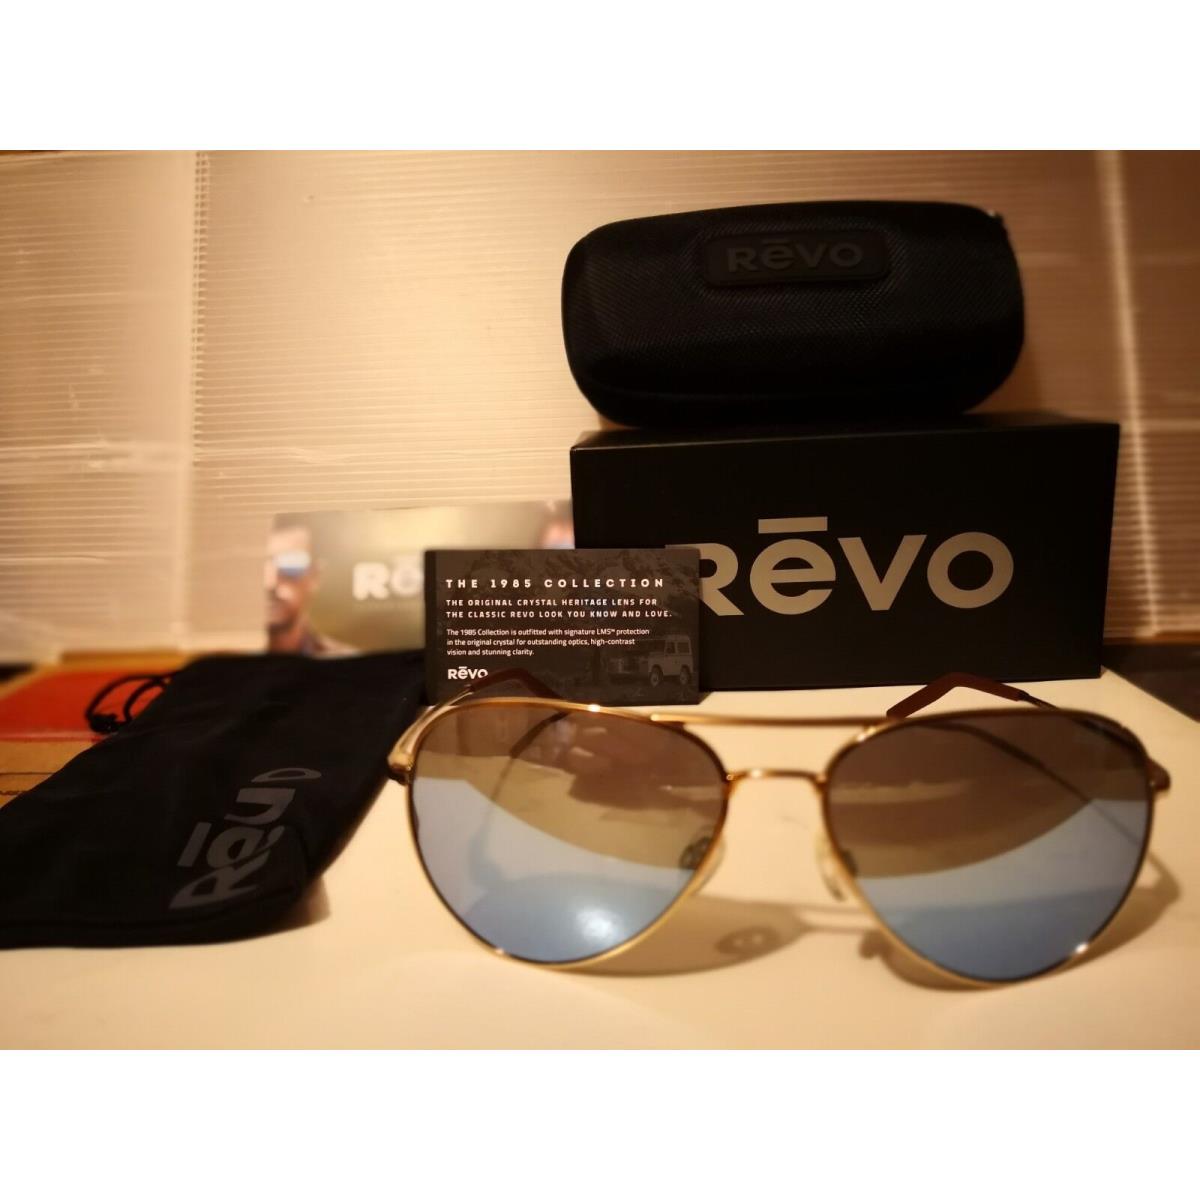 Revo sunglasses  - GOLD Frame, Crystal Blue Water Polarized Lens